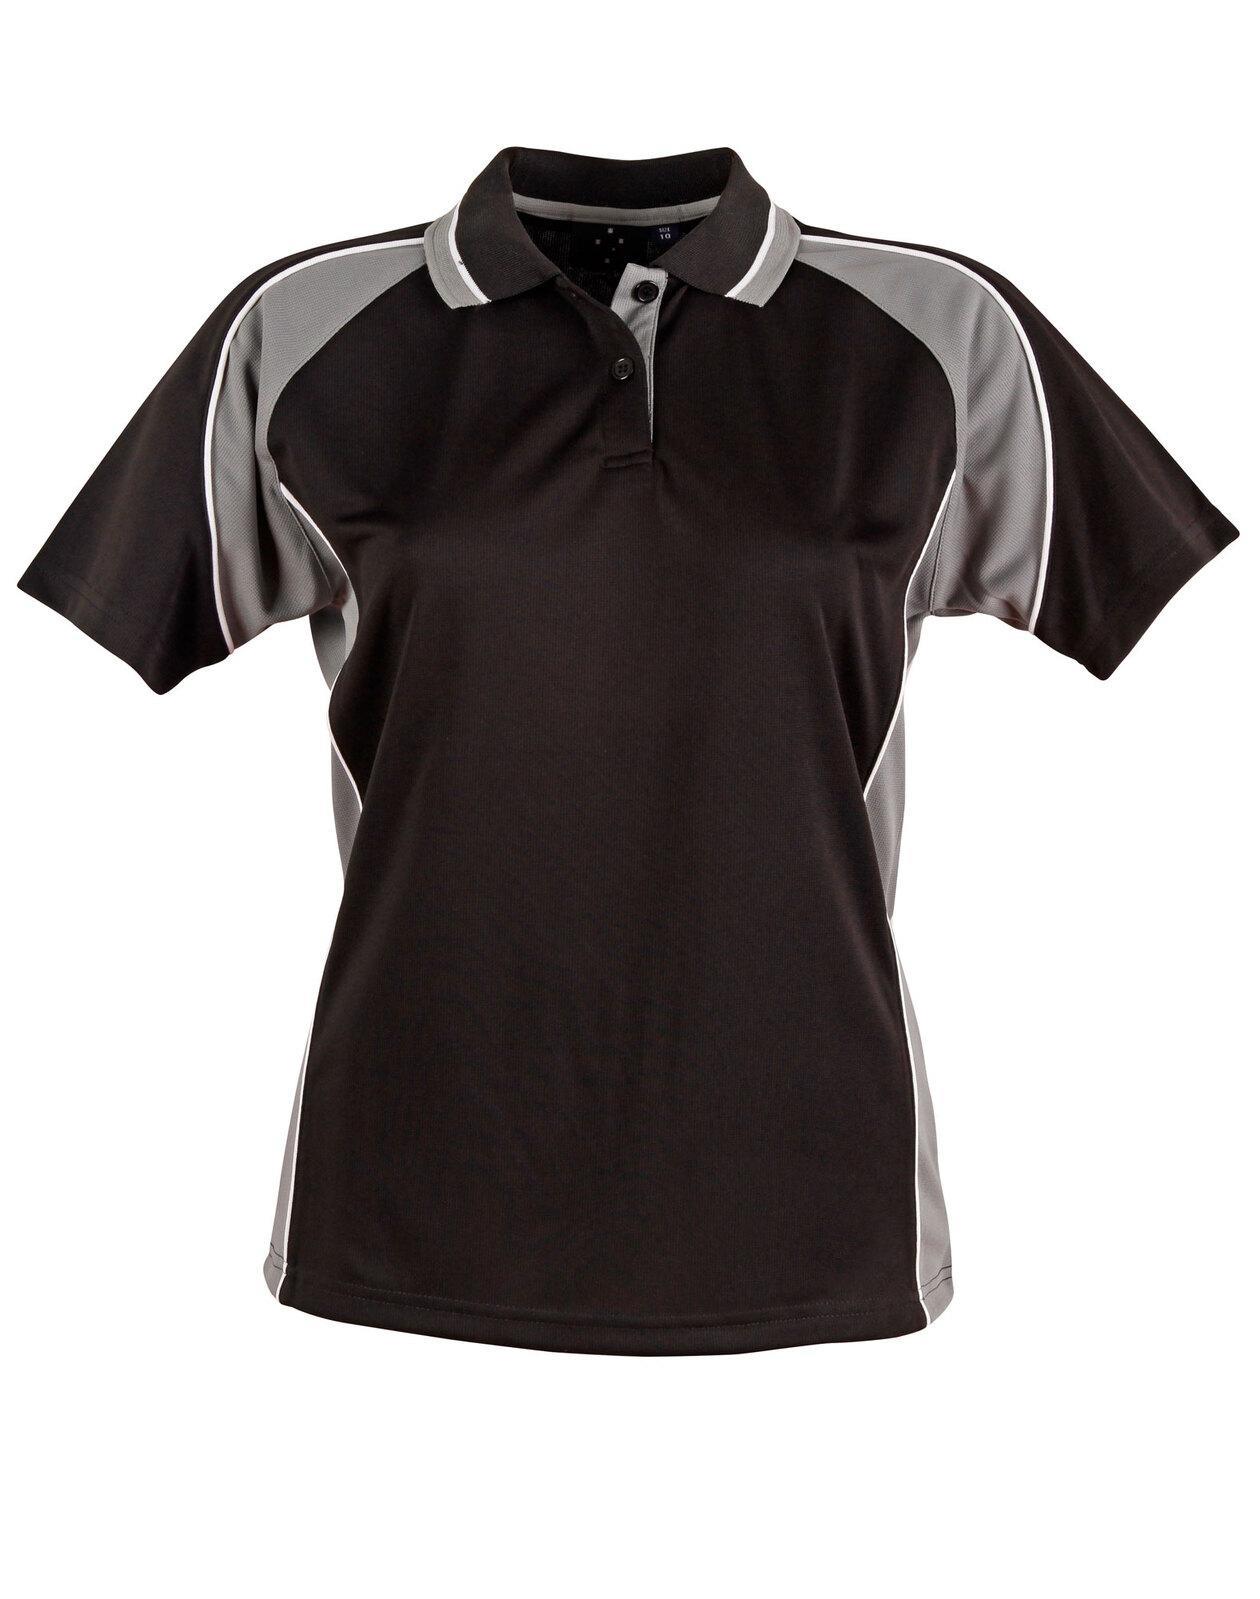 5 of PS50 Sz 18 MASCOT Tri-colour Polyester Ladies Polo Shirt Black/Ash